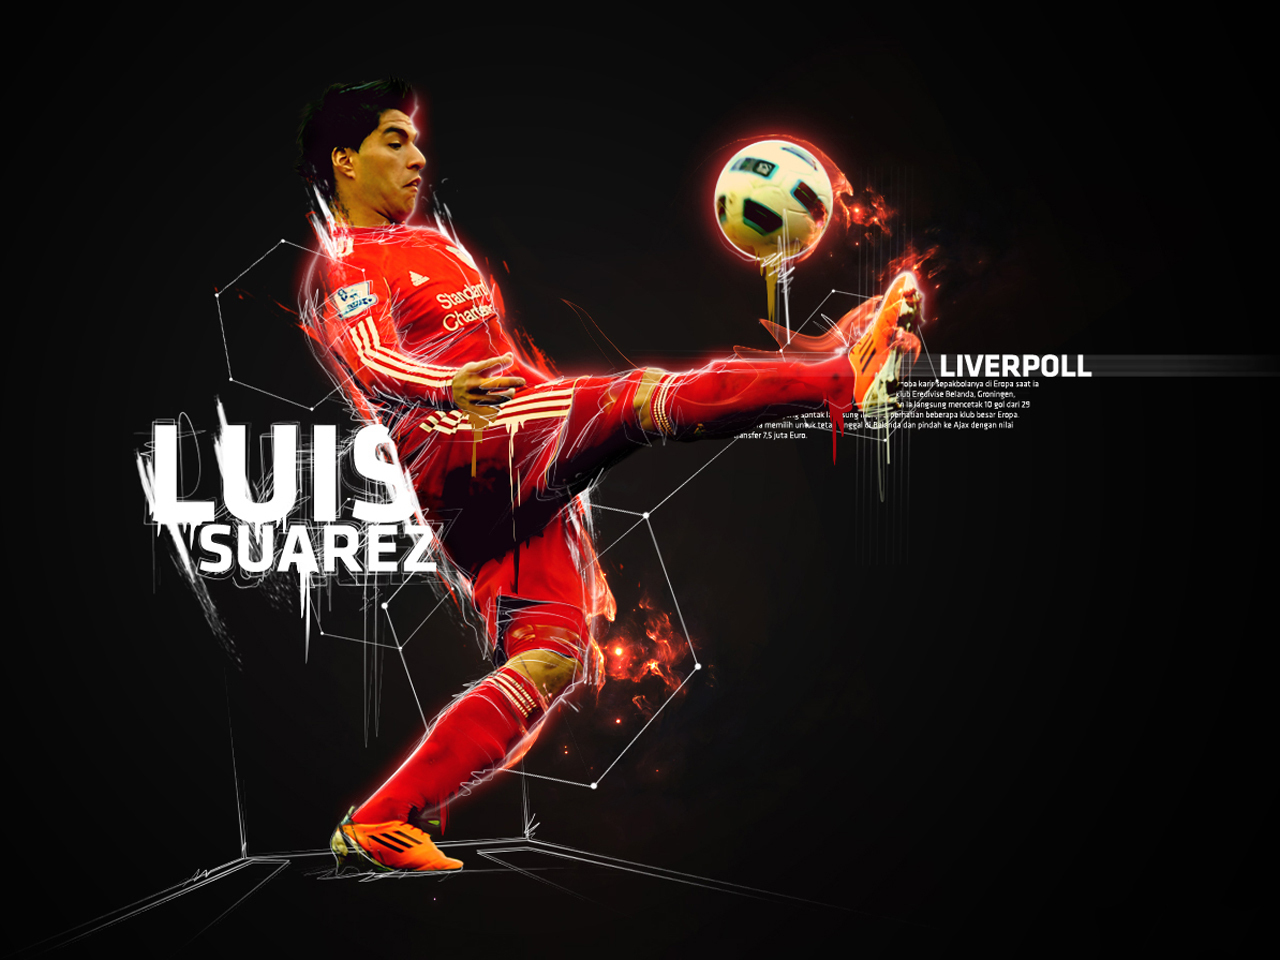 All Football Players Luis Suarez HD Wallpaper